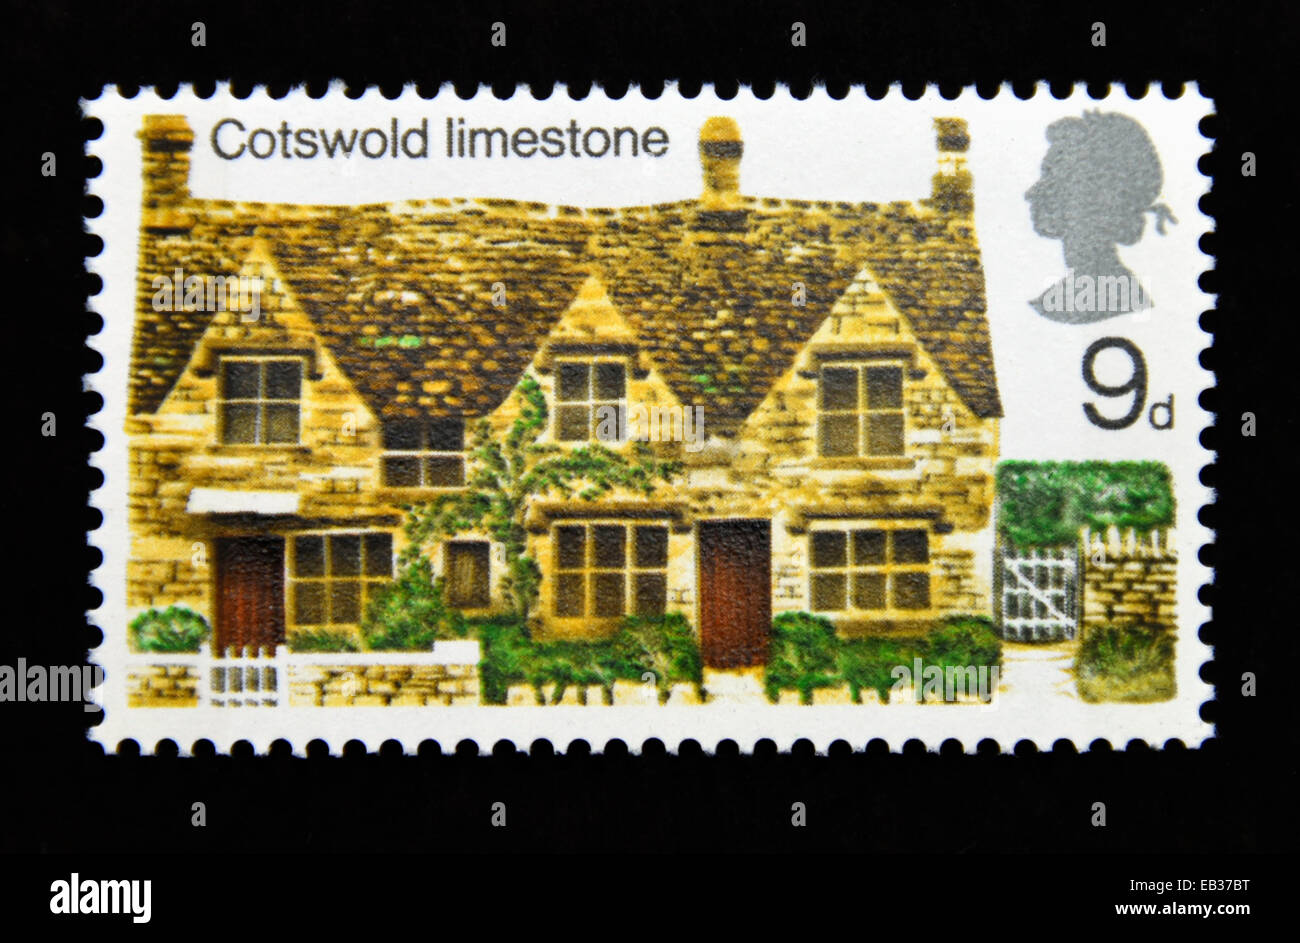 Postage stamp. Great Britain. Queen Elizabeth II. British Rural Architecture. 1970. Cotswold limestone. 9d. Stock Photo